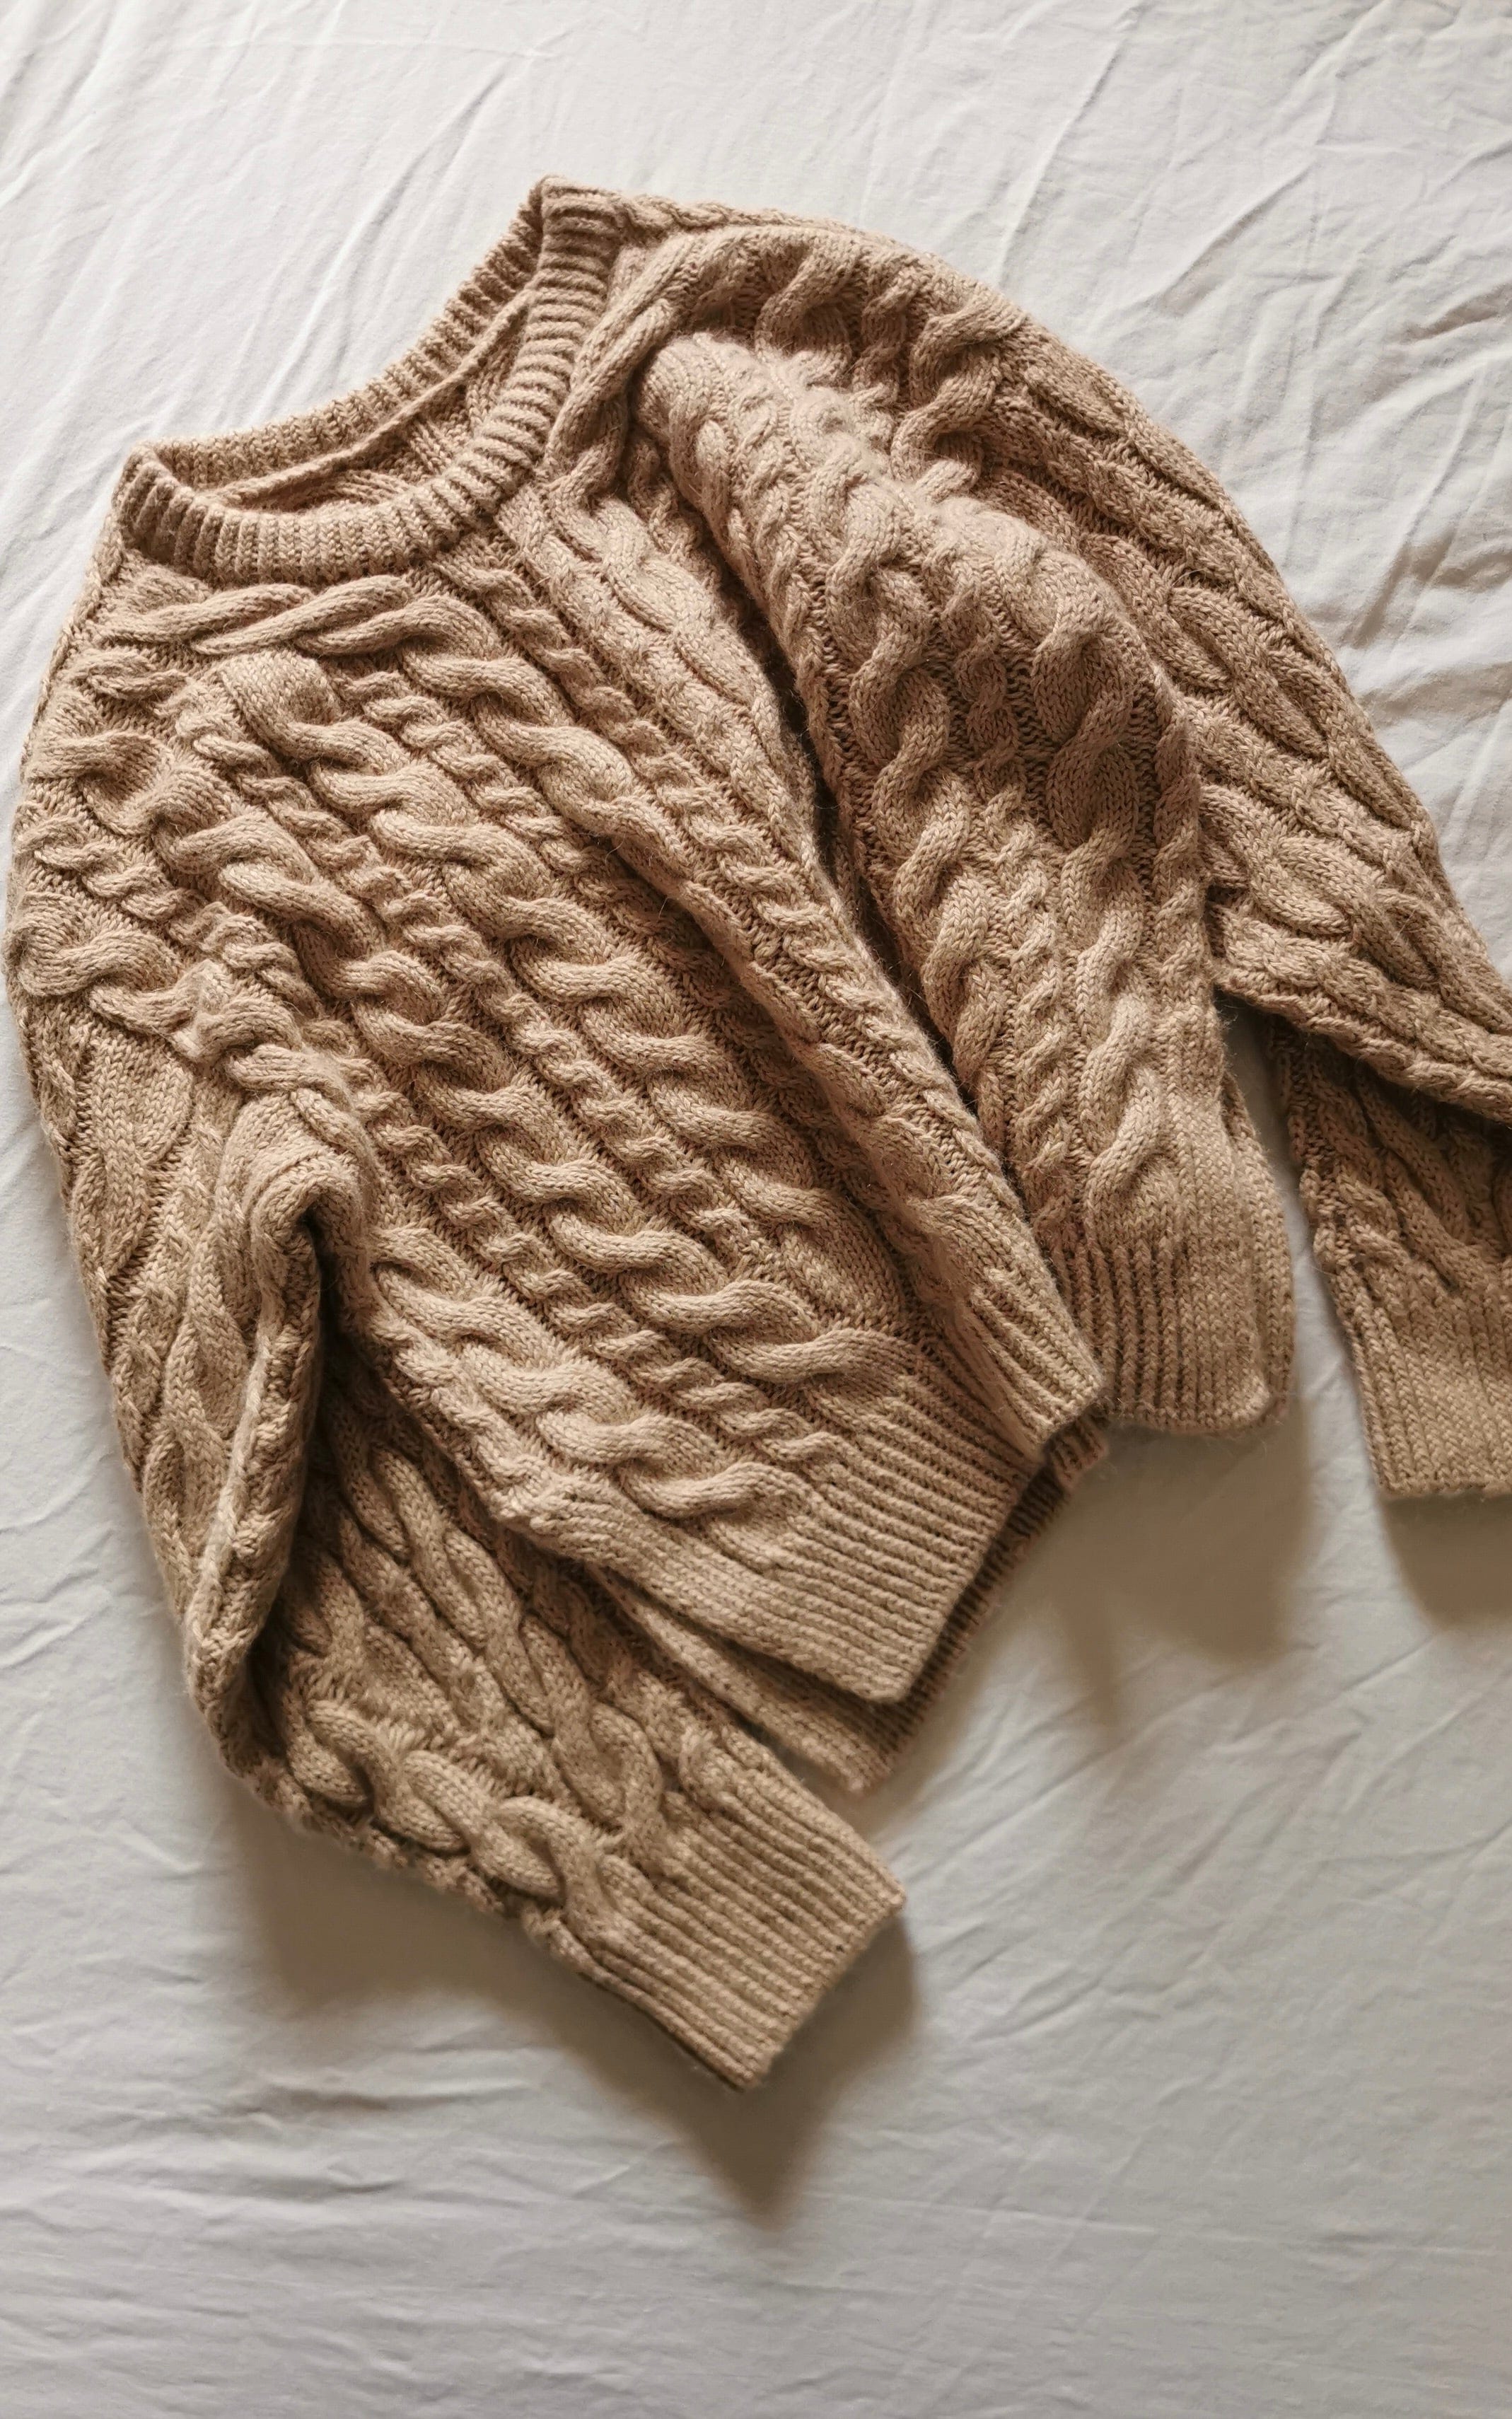 ANN.KA.THRIN Strickset Cozy Cable Sweater - DOUBLE SUNDAY - Strickset